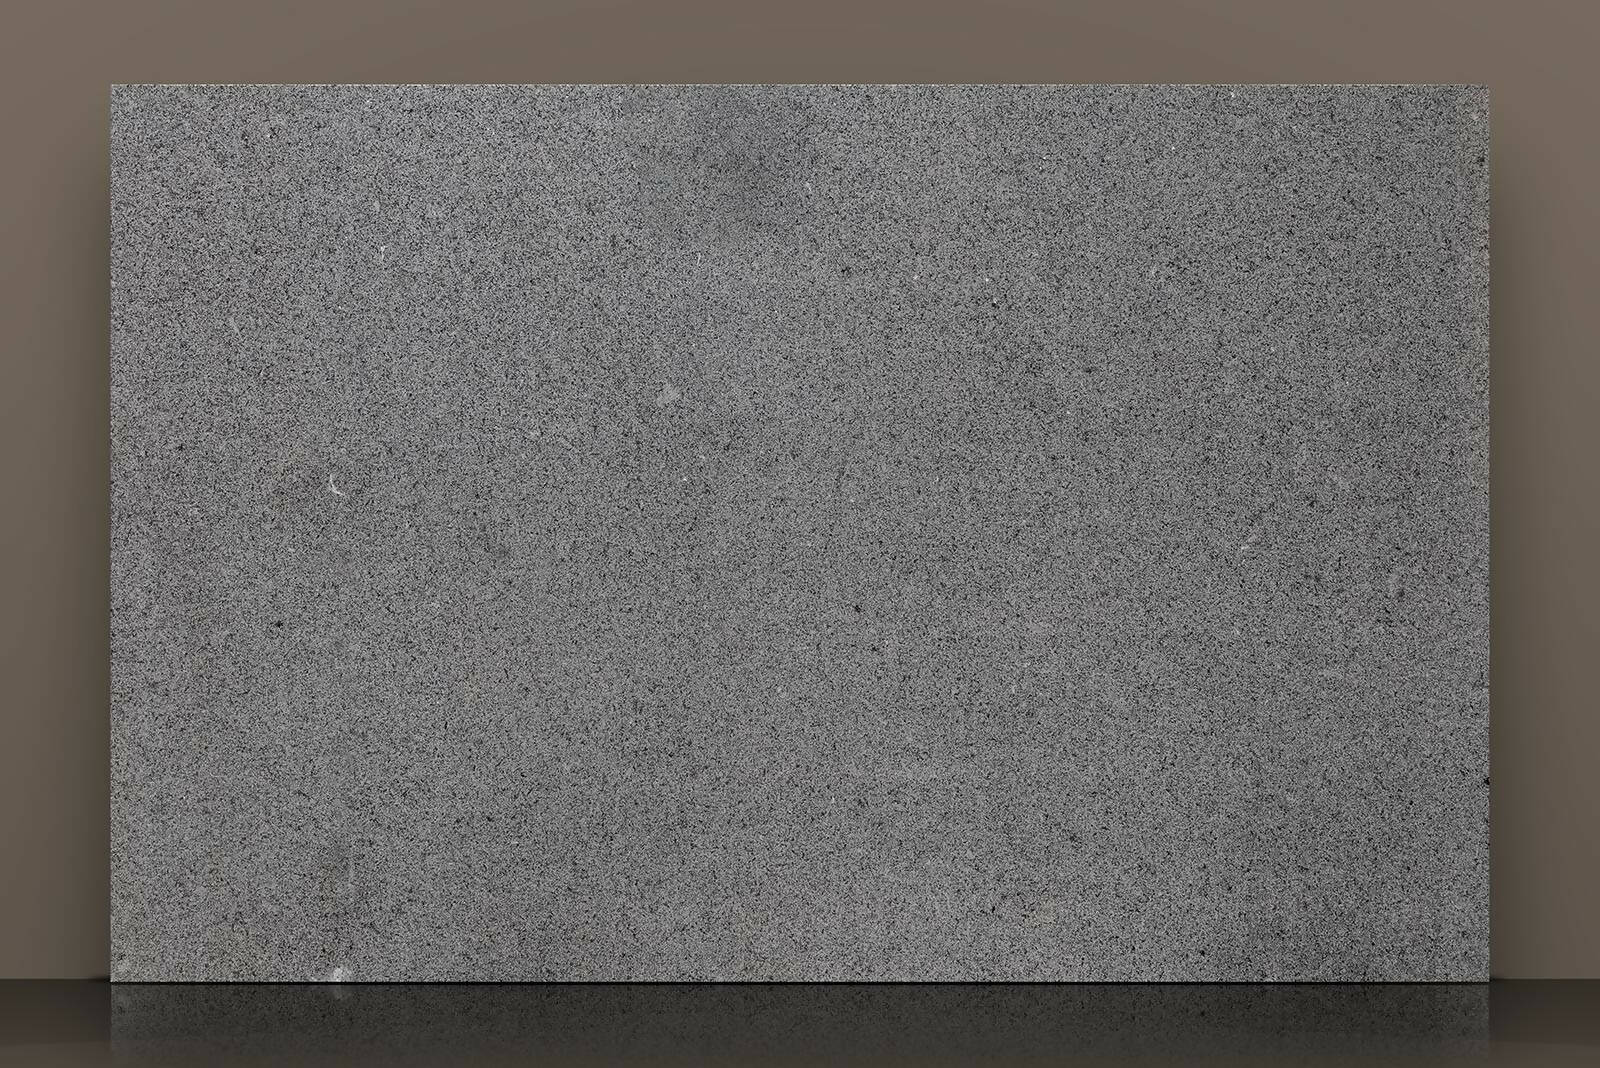 BRAZIL BLACK GRANITE,Granite,Sonic Stone,www.work-tops.com